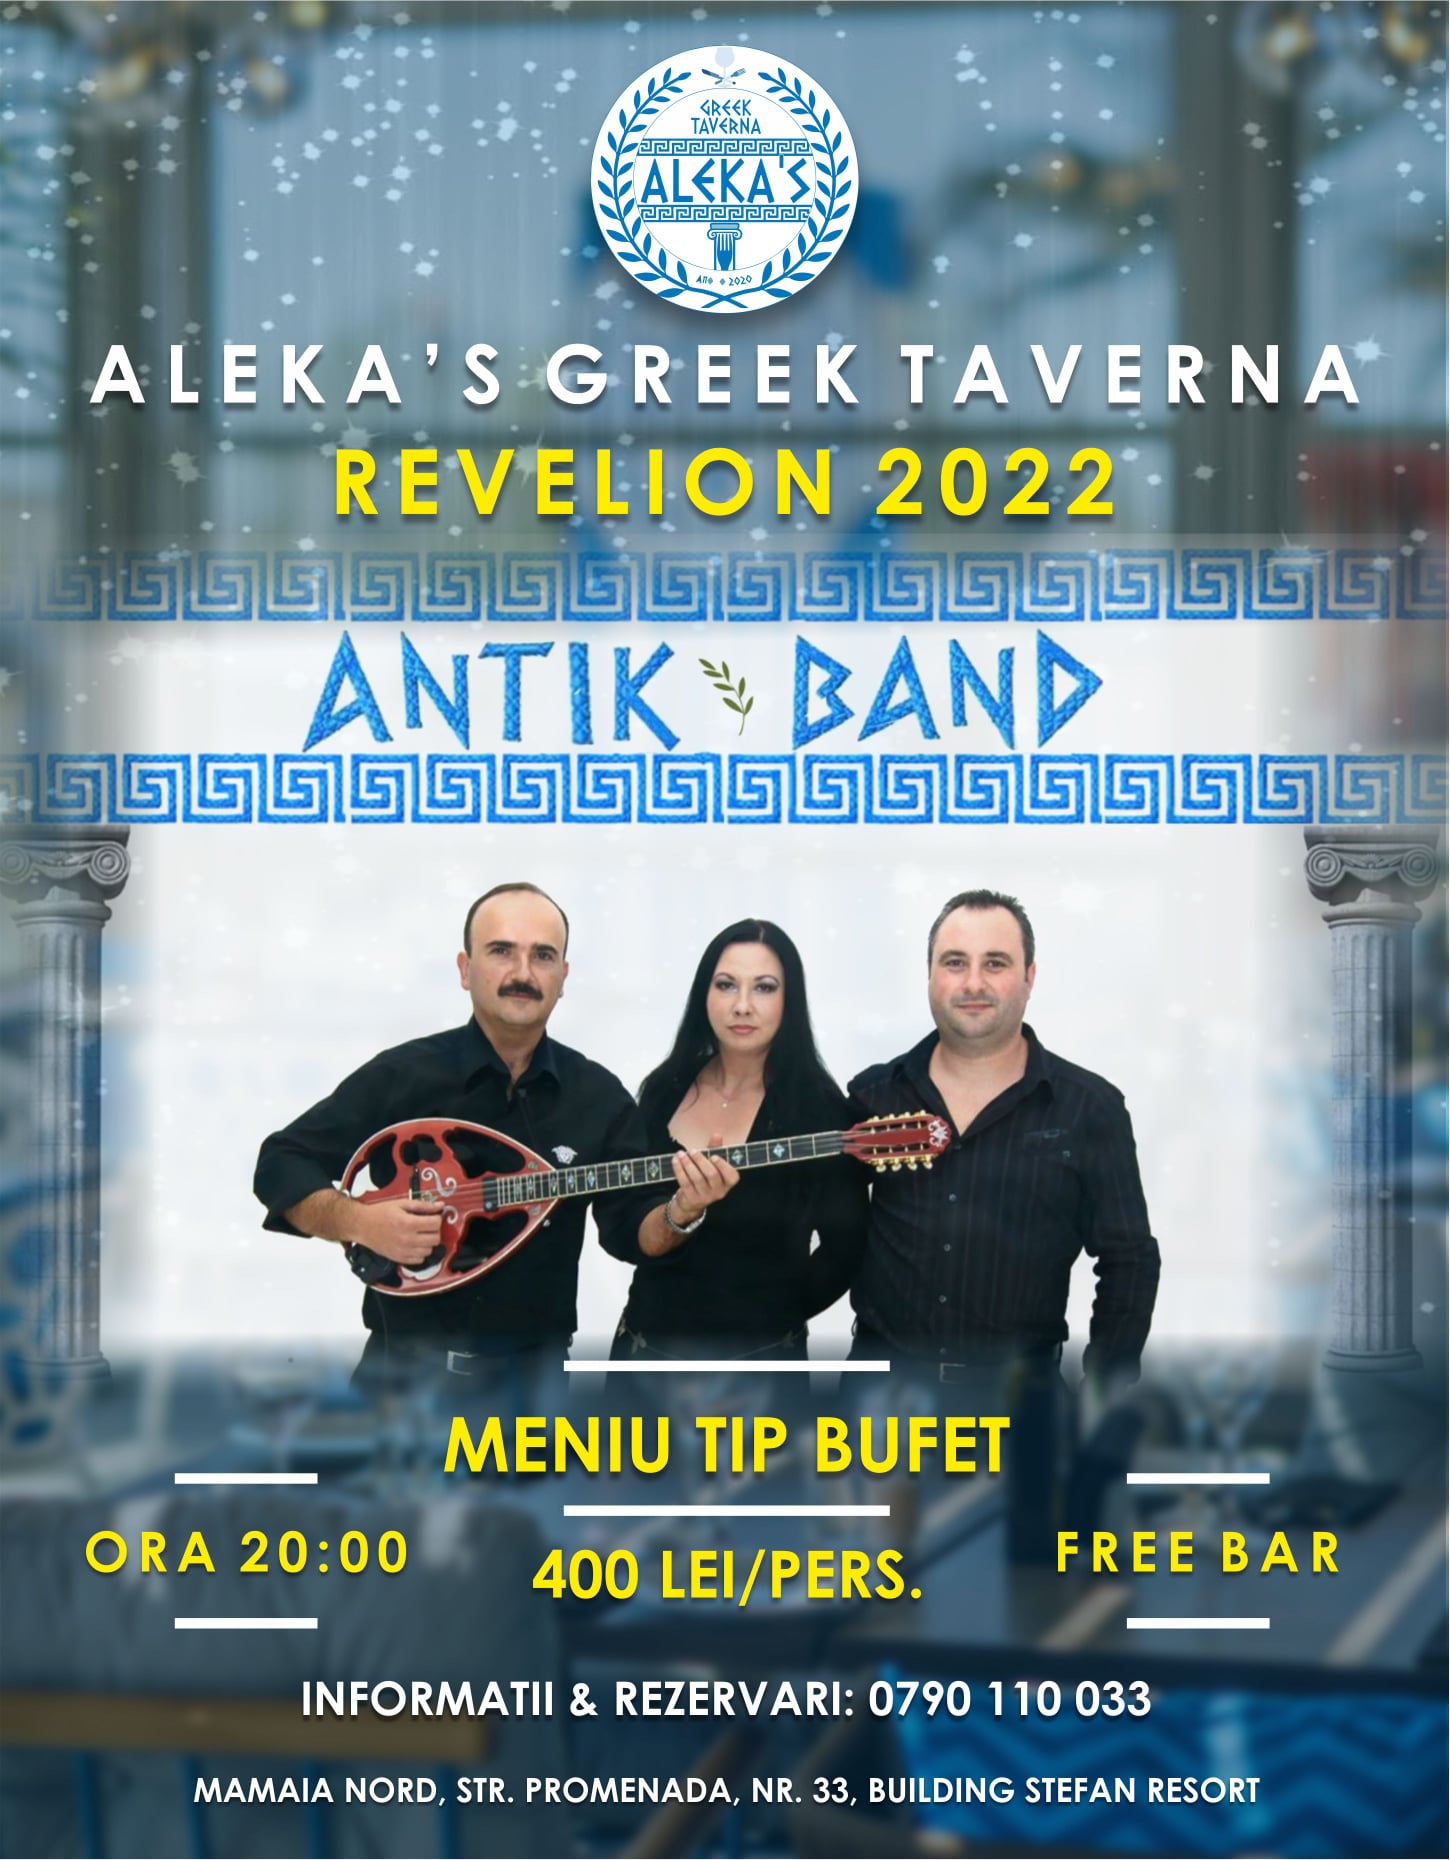 Revelion 2022 în stil grecesc la Alekas Greek Taverna